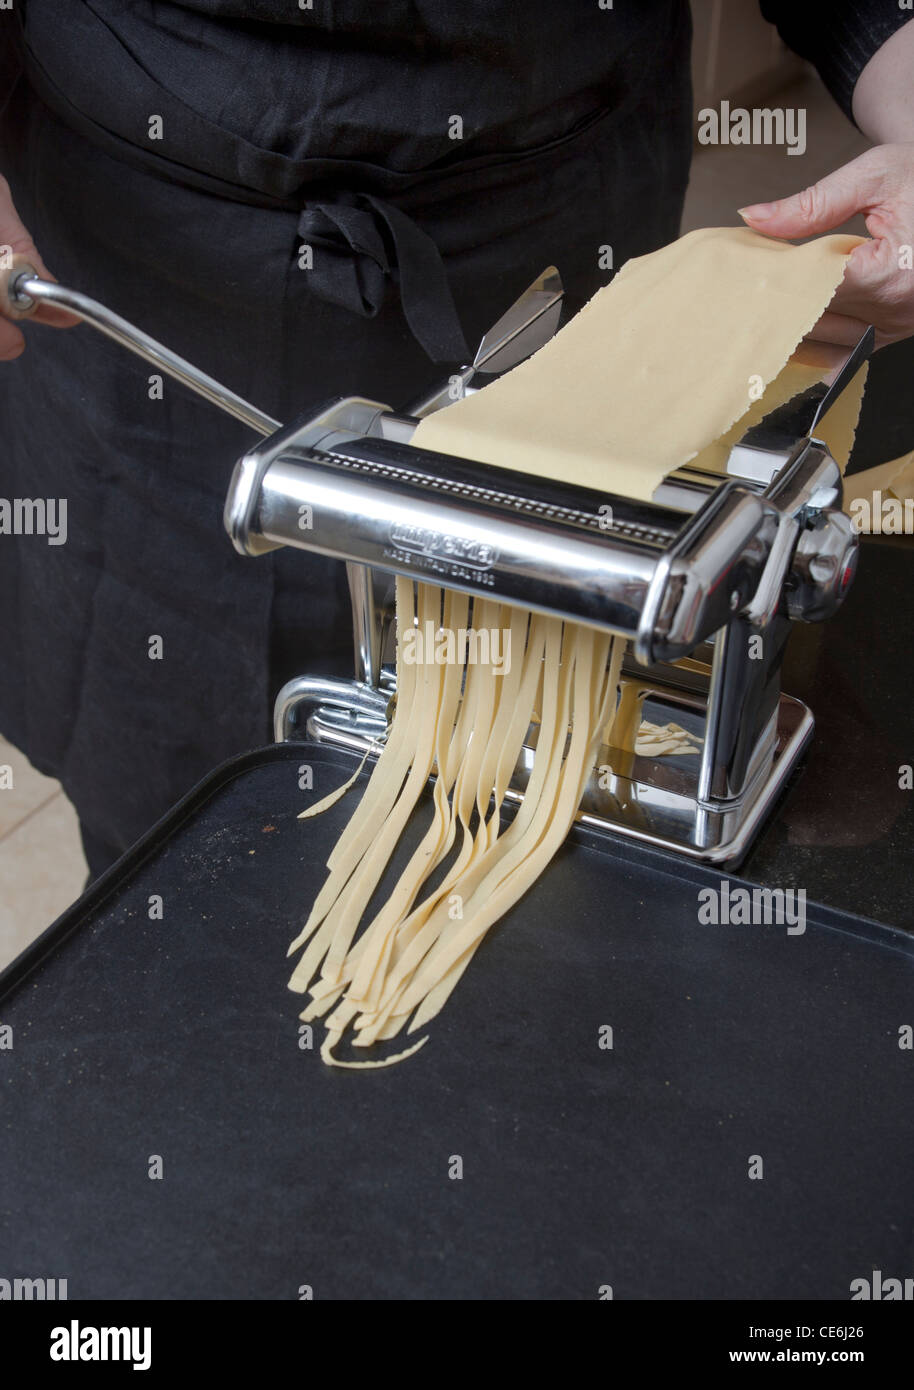 Maquina para pasta manual de Imperia para hacer pasta casera